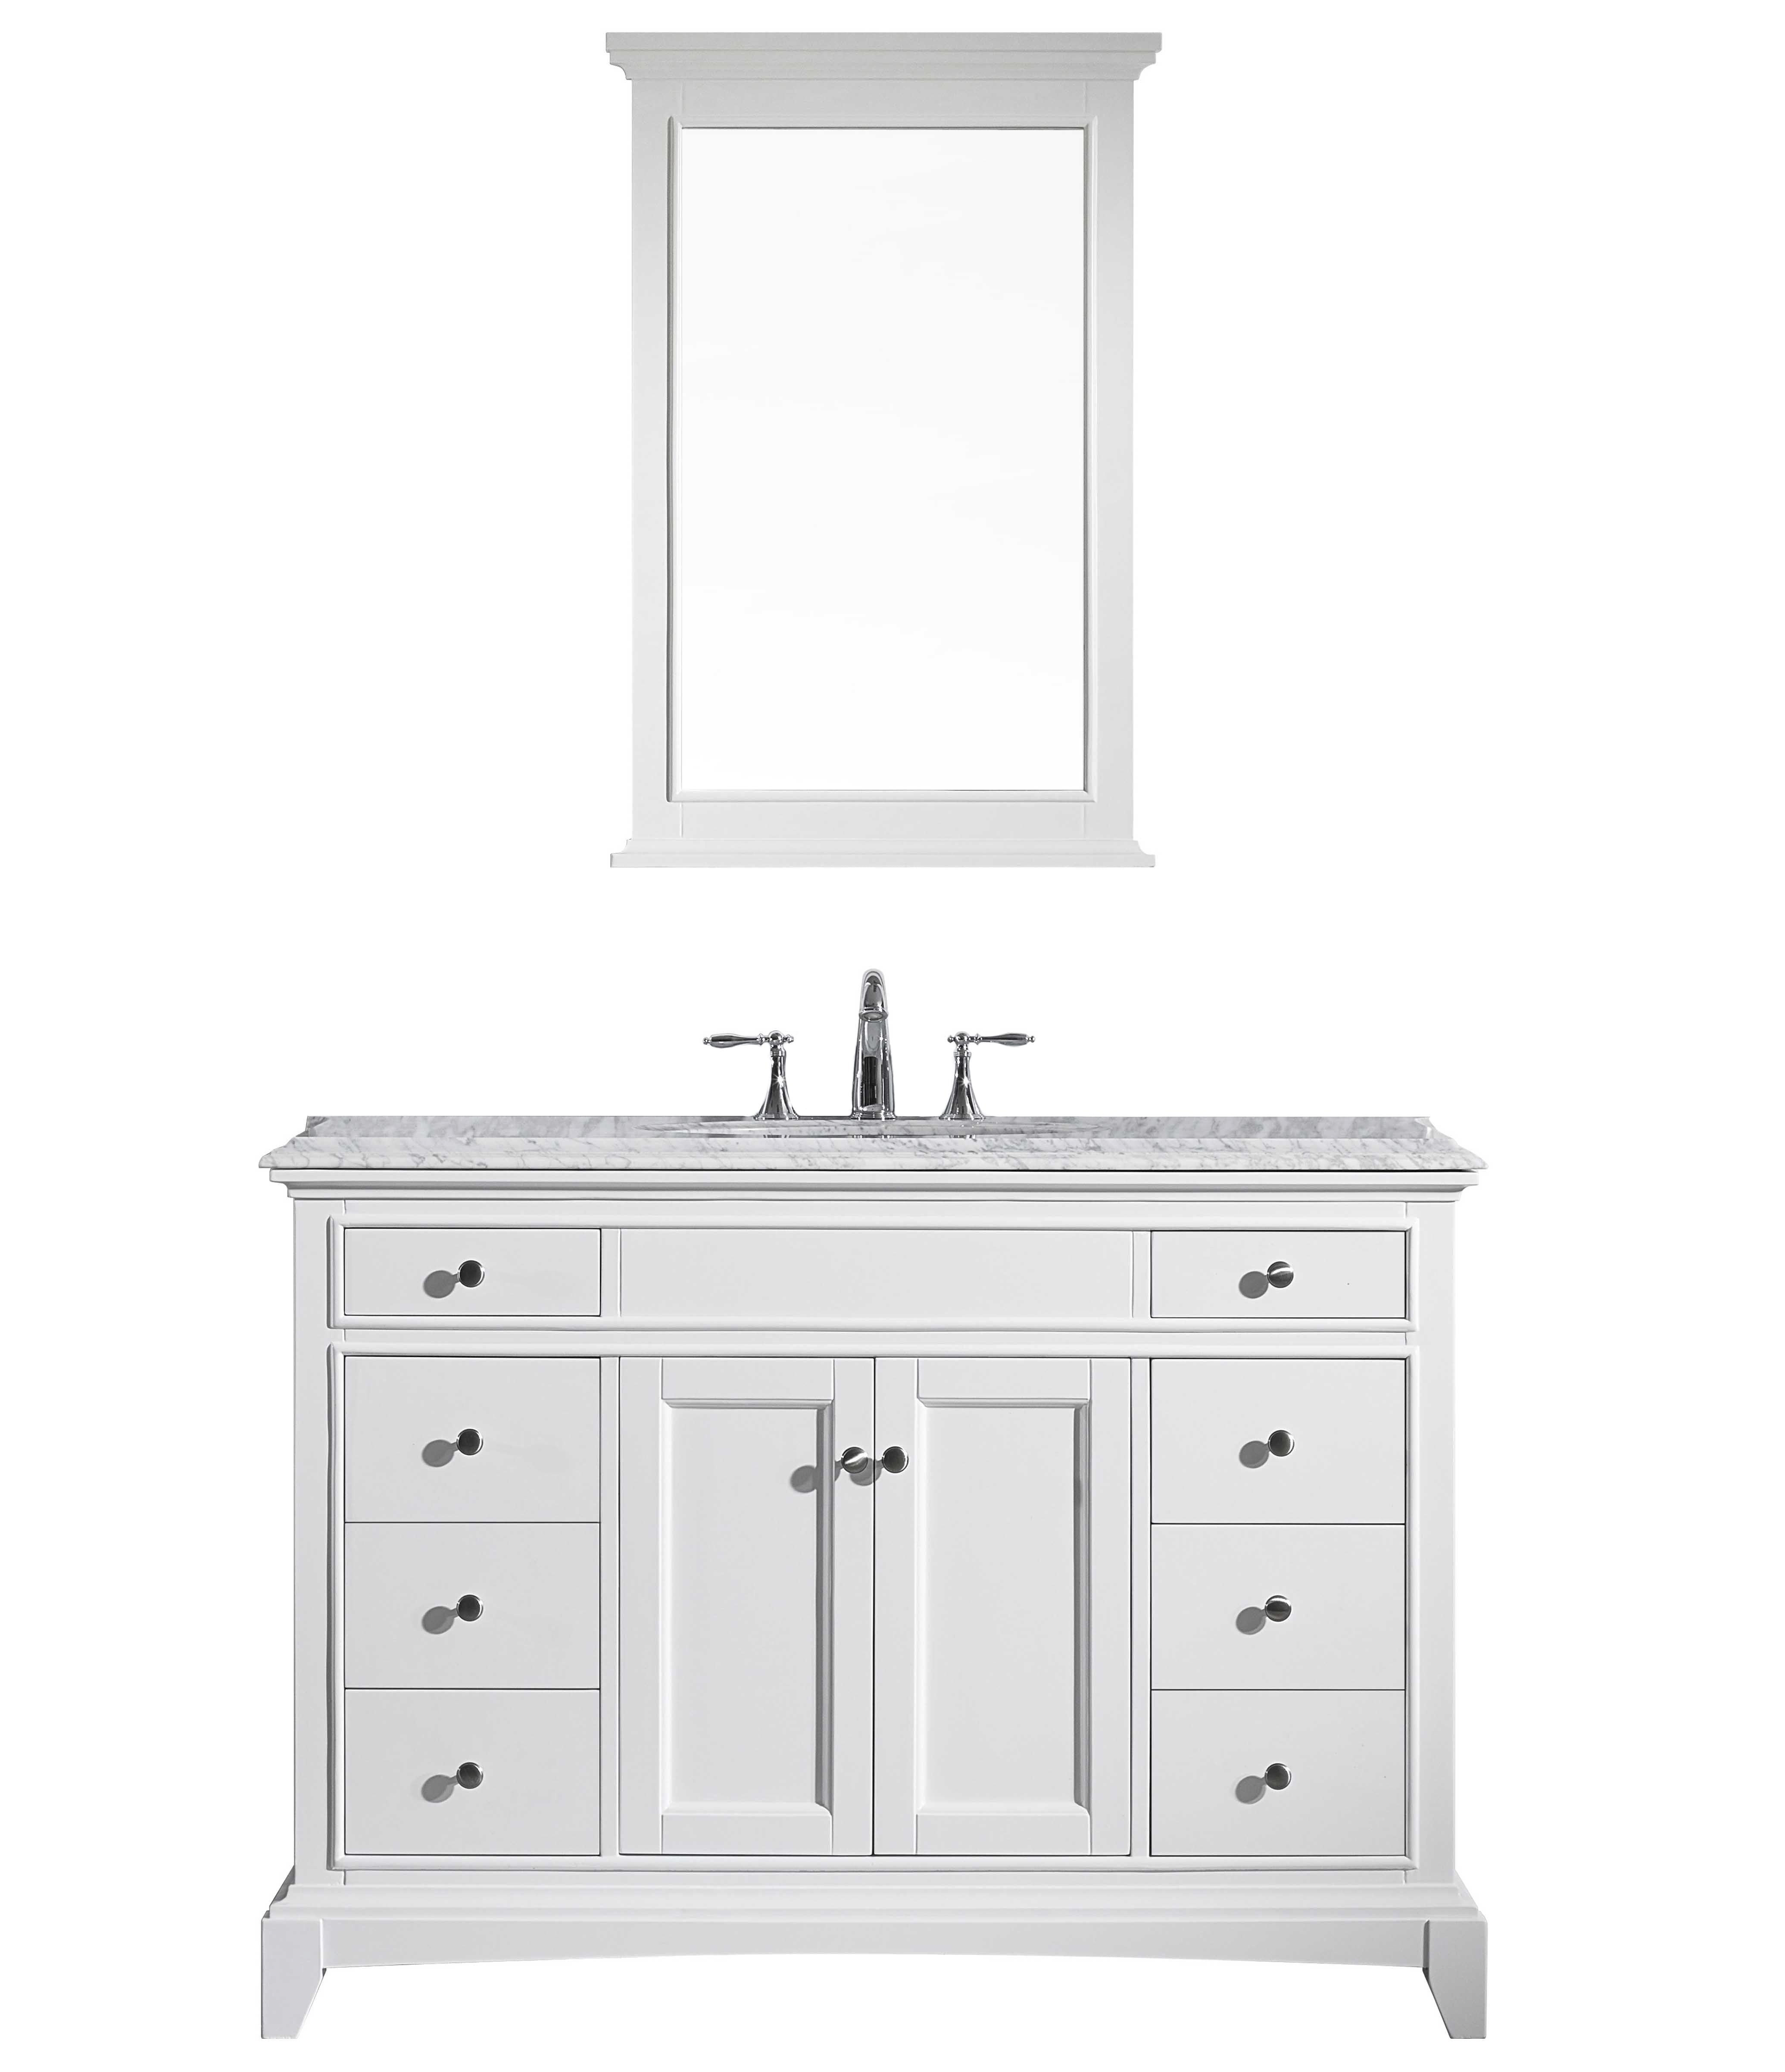 Solid Oak Bathroom CabinetOak Sink Bathroom CabinetMarble Bathroom Vanity 